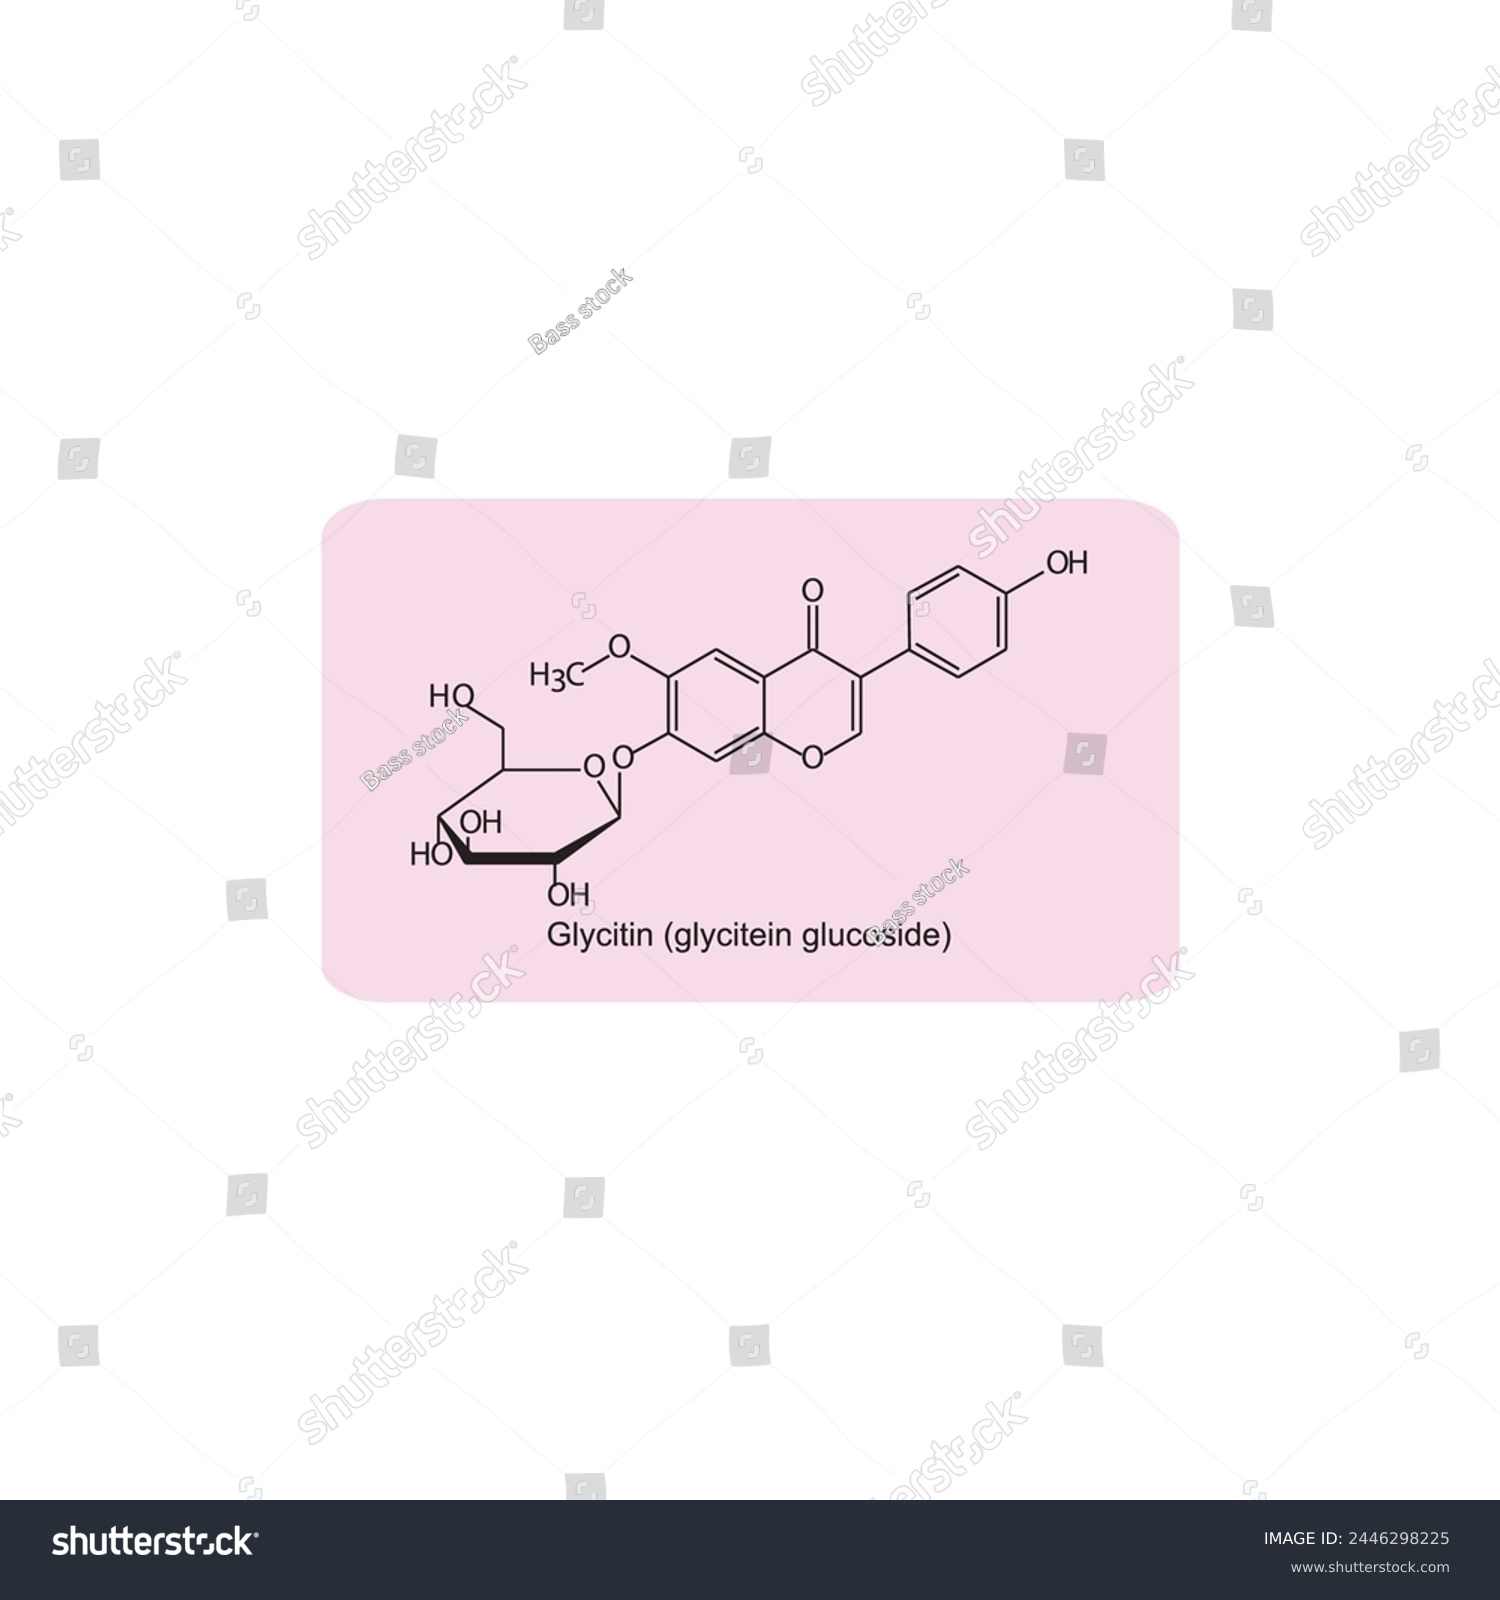 SVG of Glycitin (glycitein glucoside) skeletal structure diagram.Isoflavanone compound molecule scientific illustration on pink background. svg